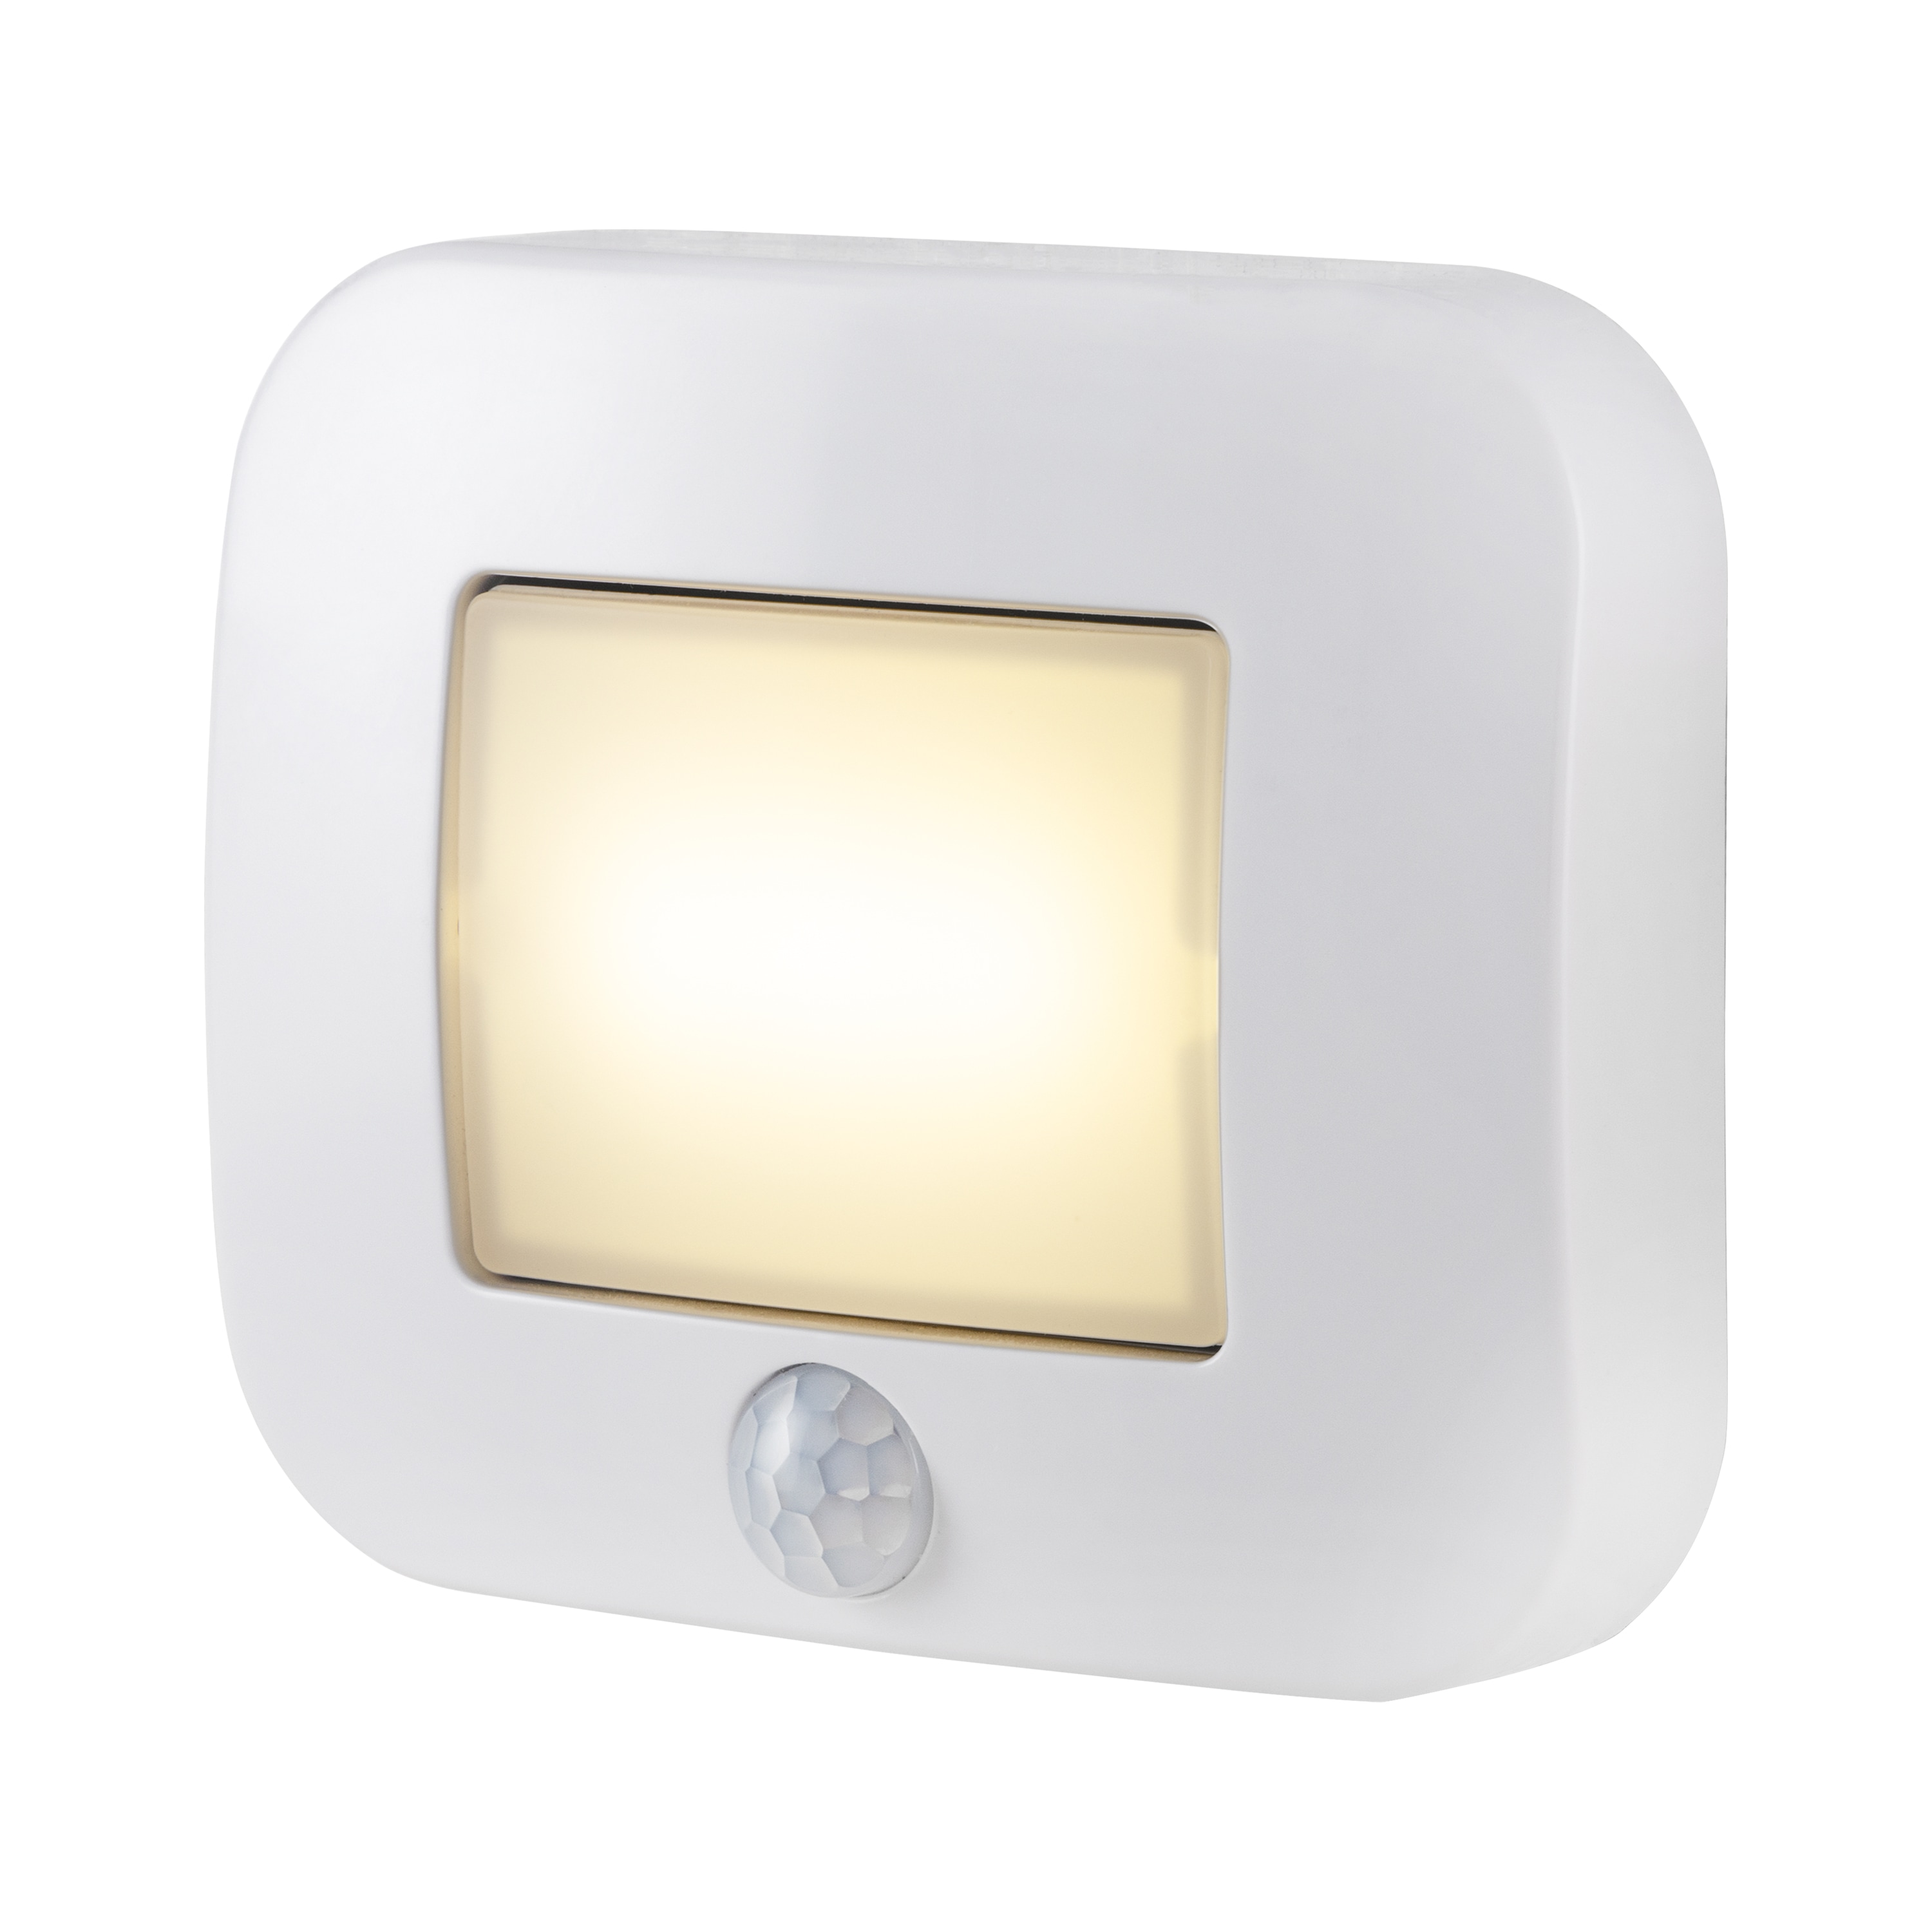 NEW Portable Reading Light Cordless Battery-Powered LED Night Light Hallway Lamp 